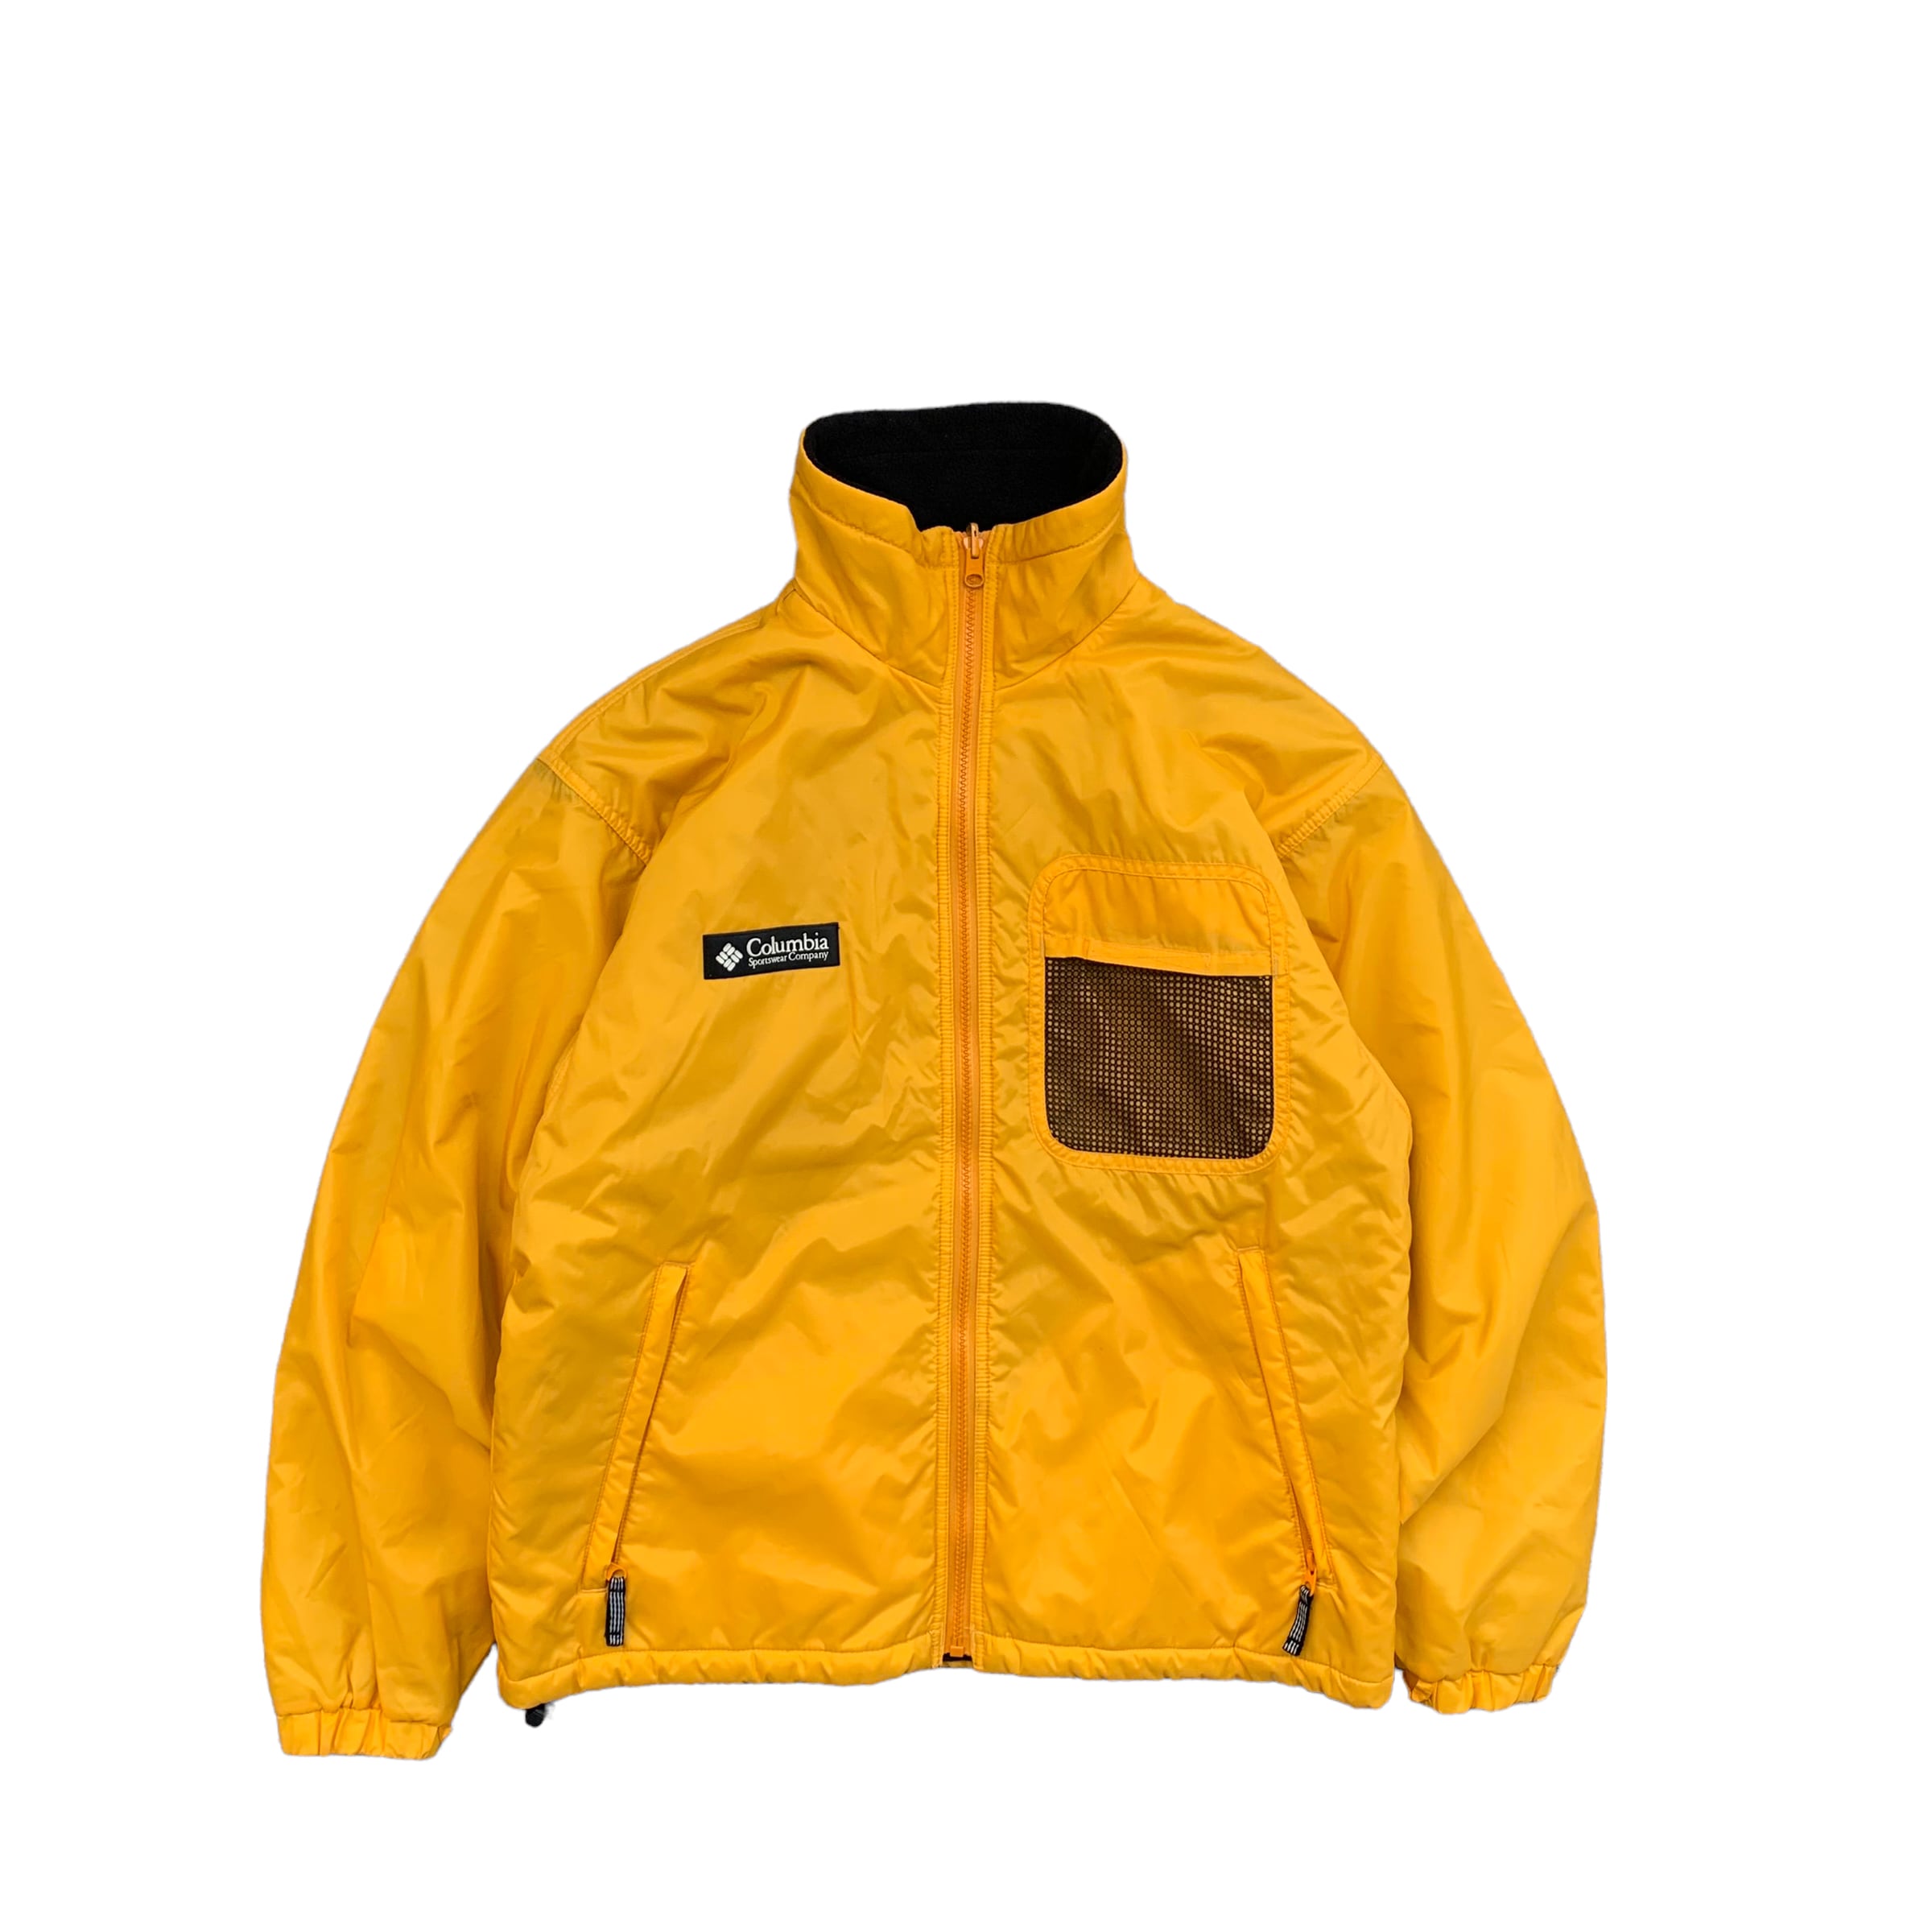 Columbia Nylon Jacket （Used）